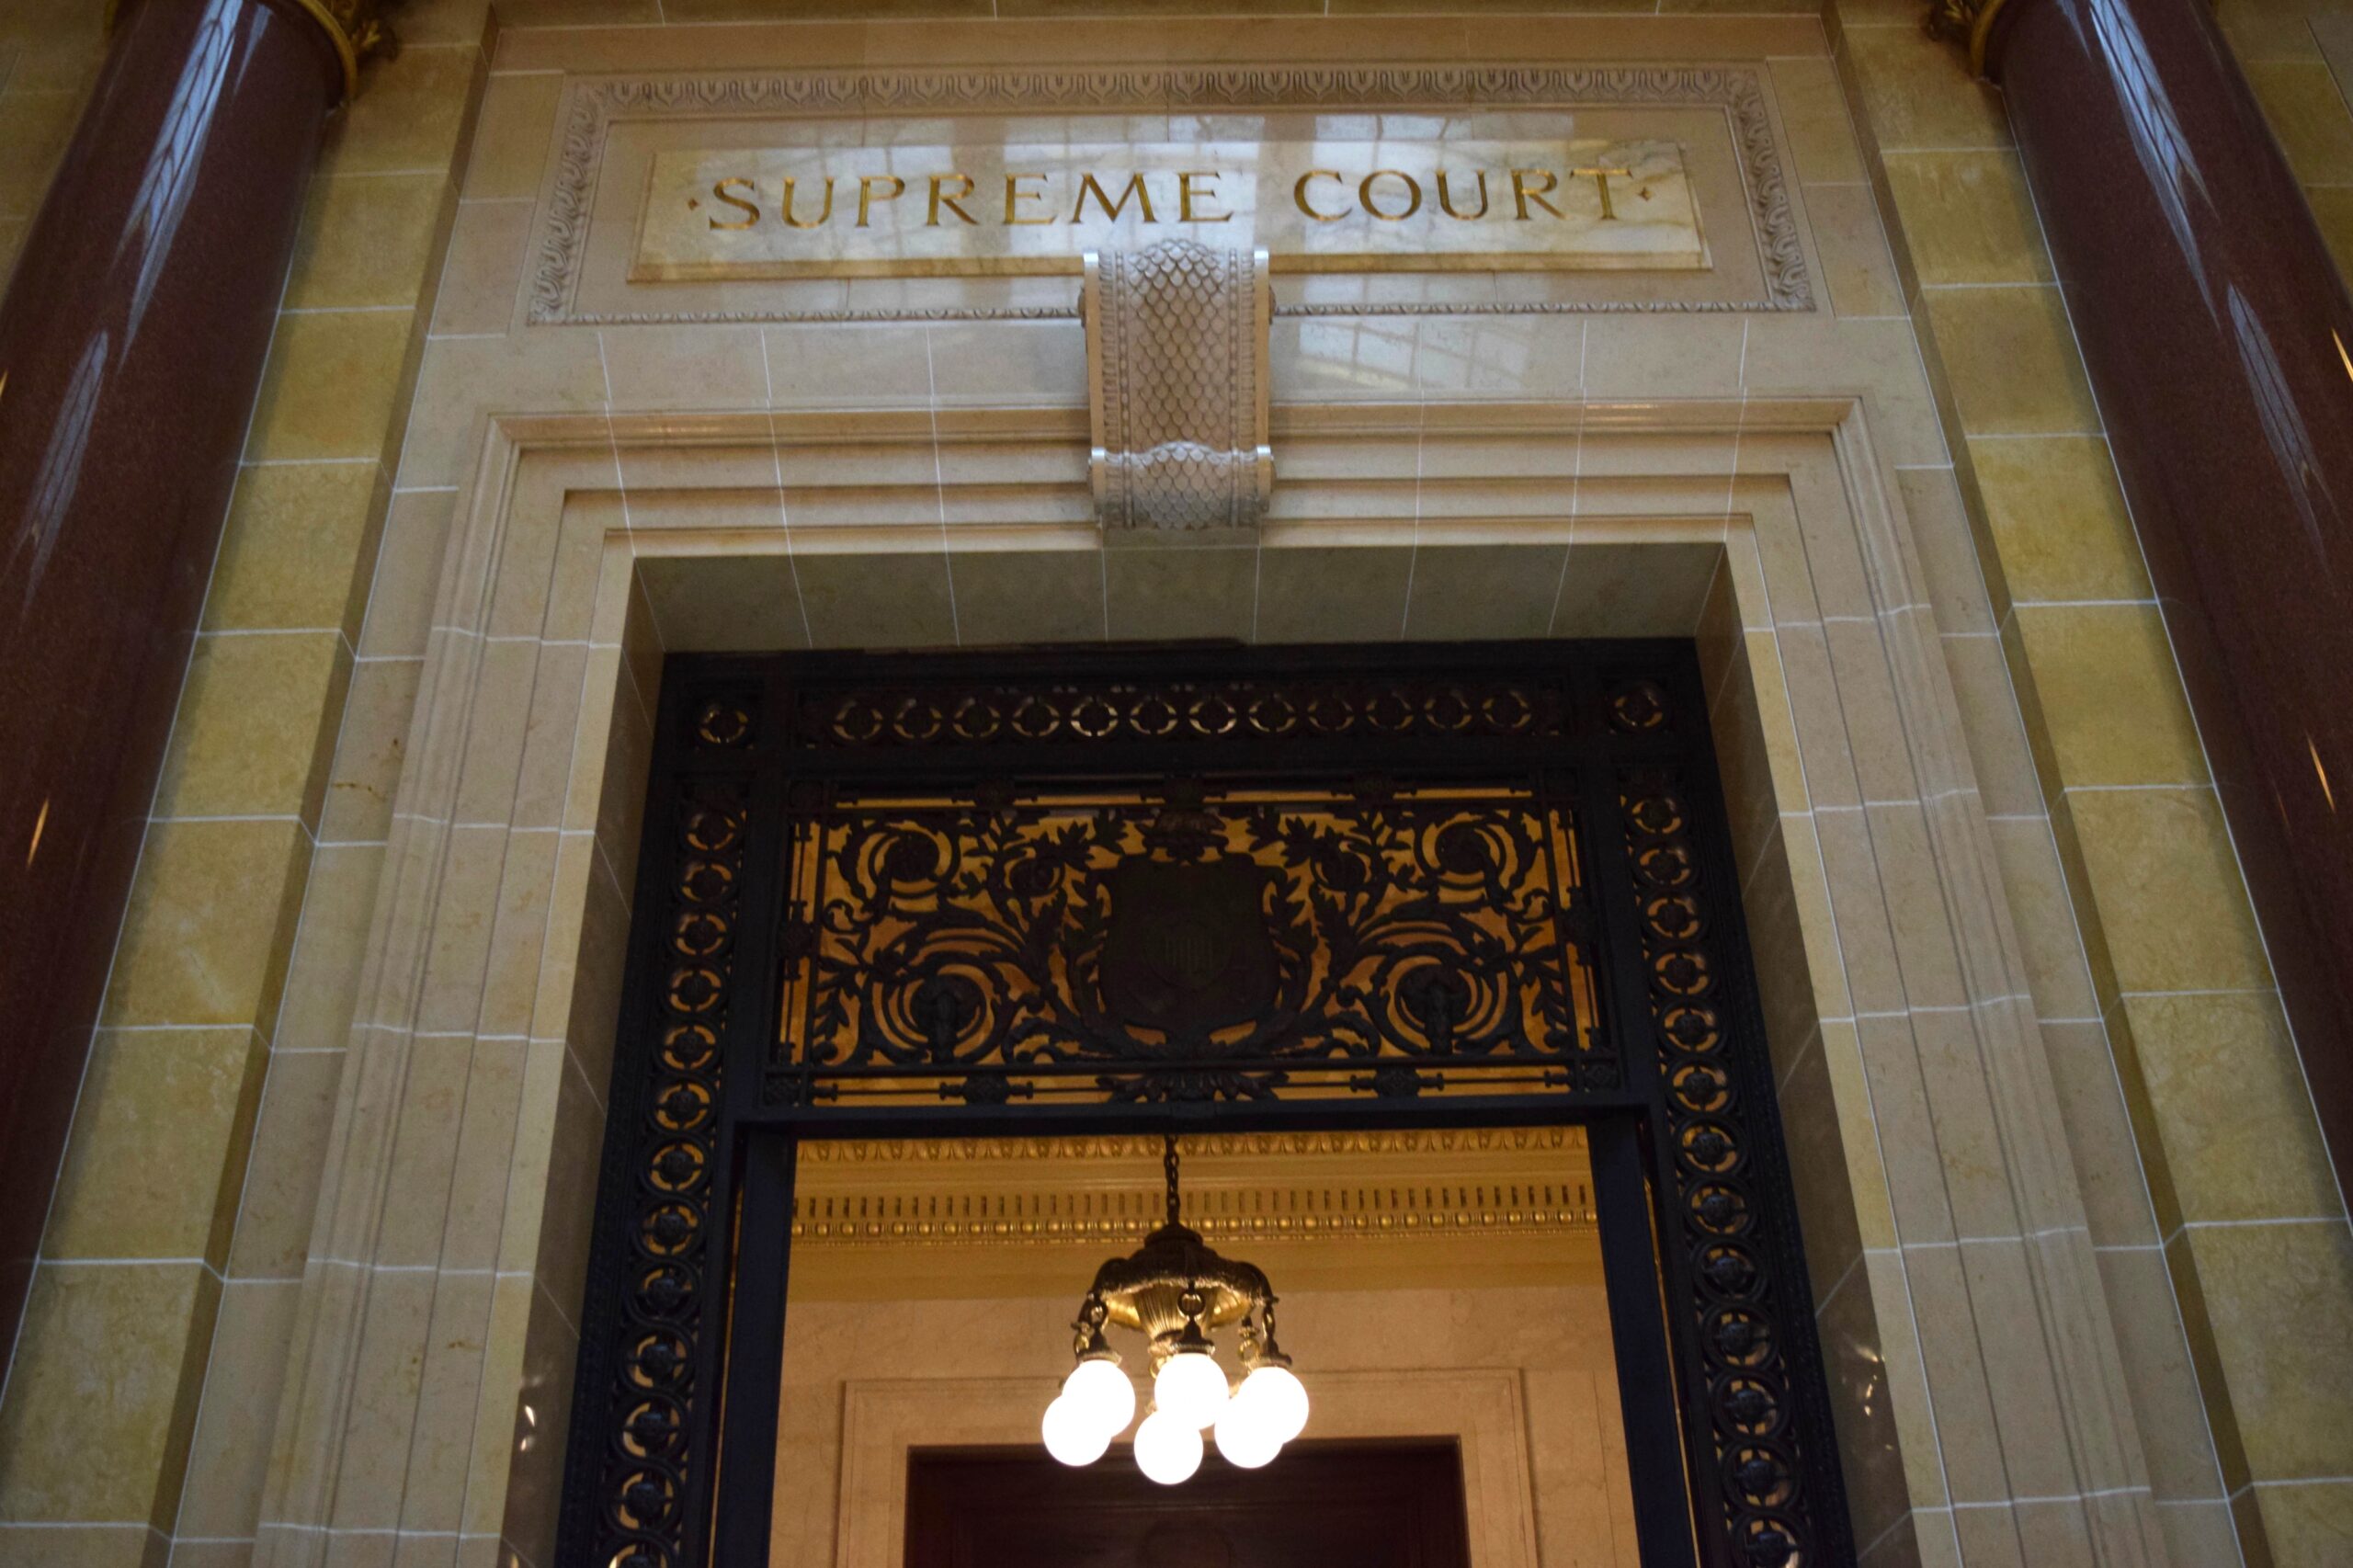 Wisconsin Supreme Court entryway